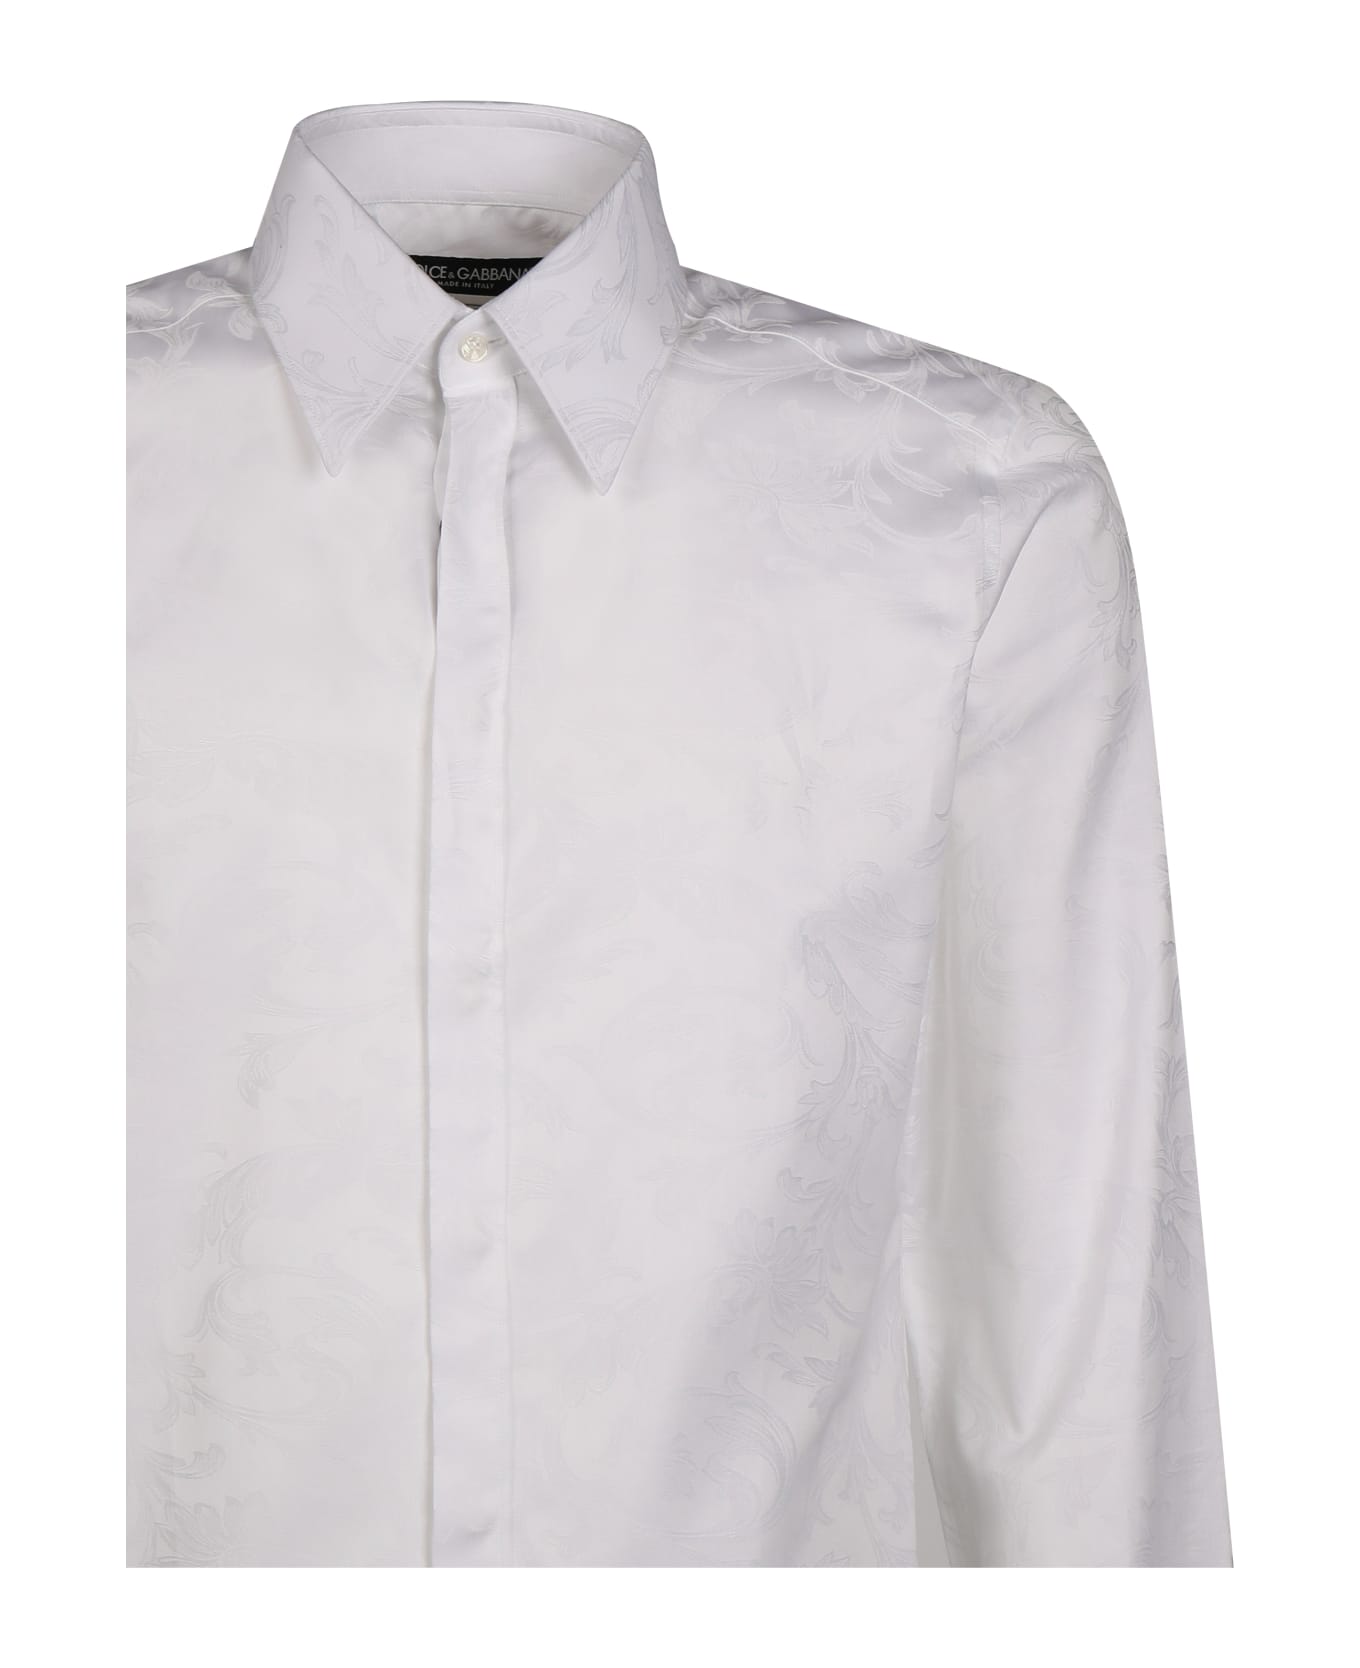 Dolce & Gabbana Floral Jacquard biustonosz Martini Shirt - White